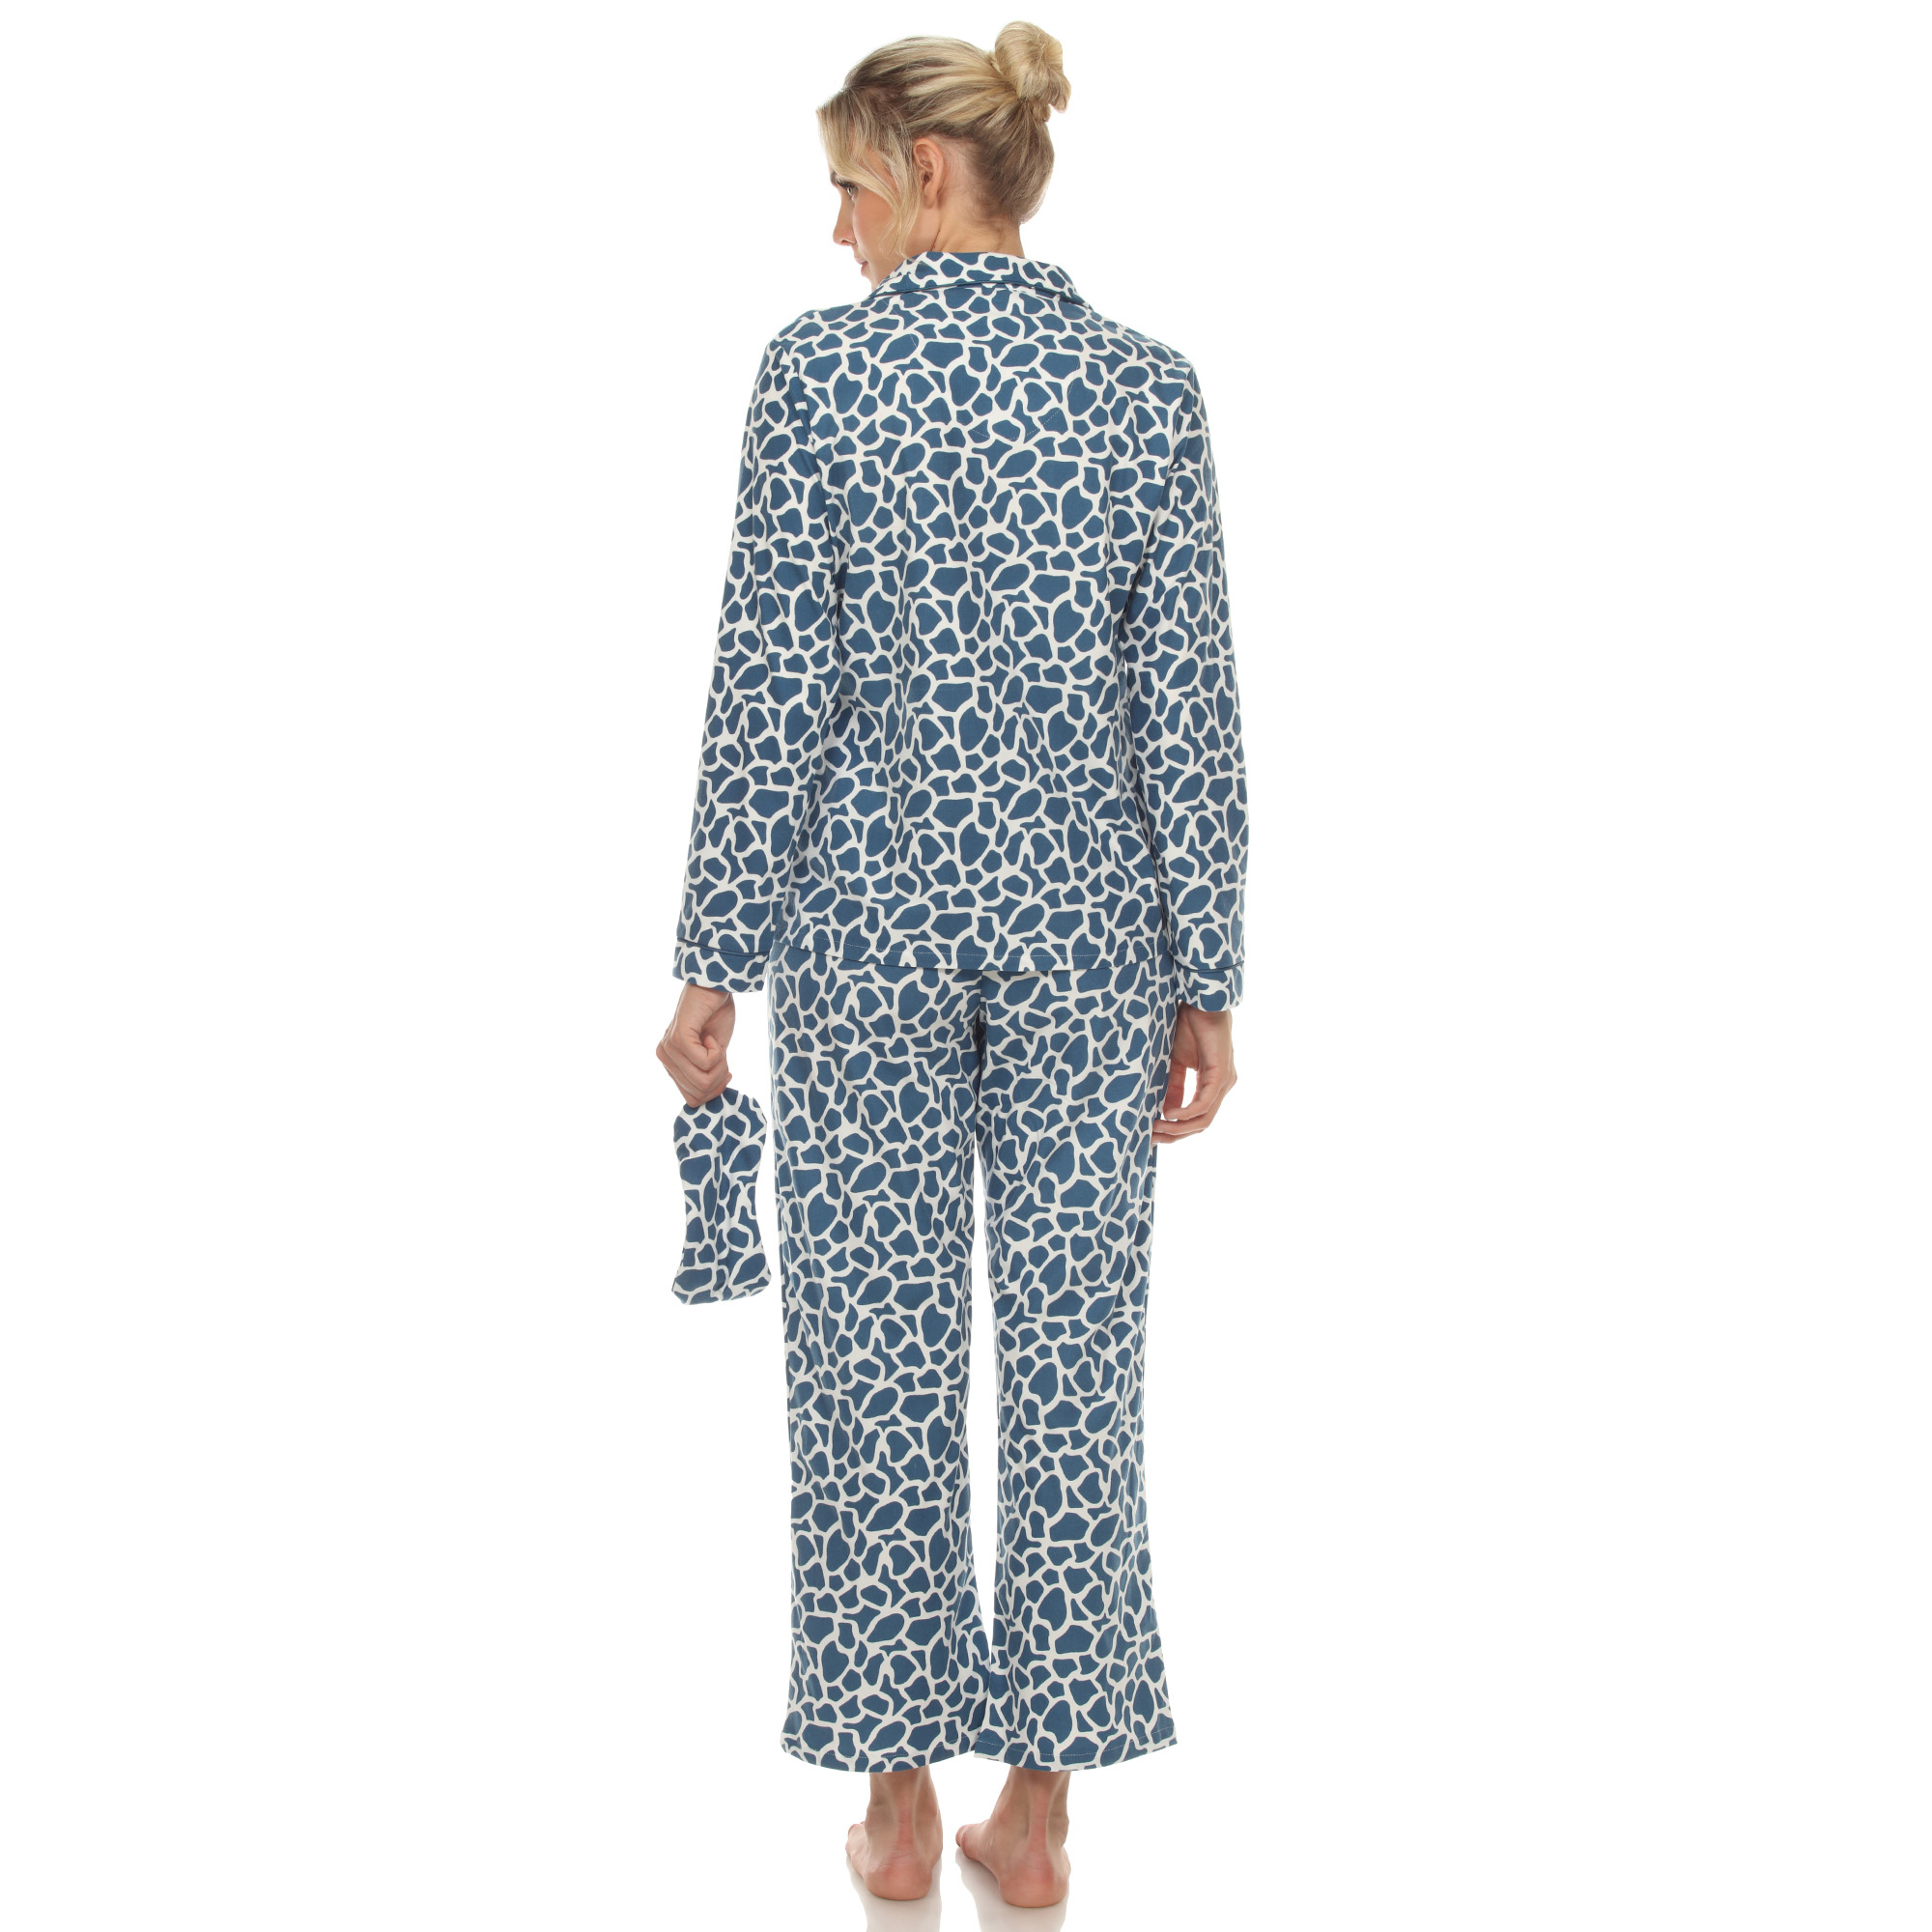 White Mark Women's Animal Print Three-Piece Pajama Set - Brown Cheetah, Small